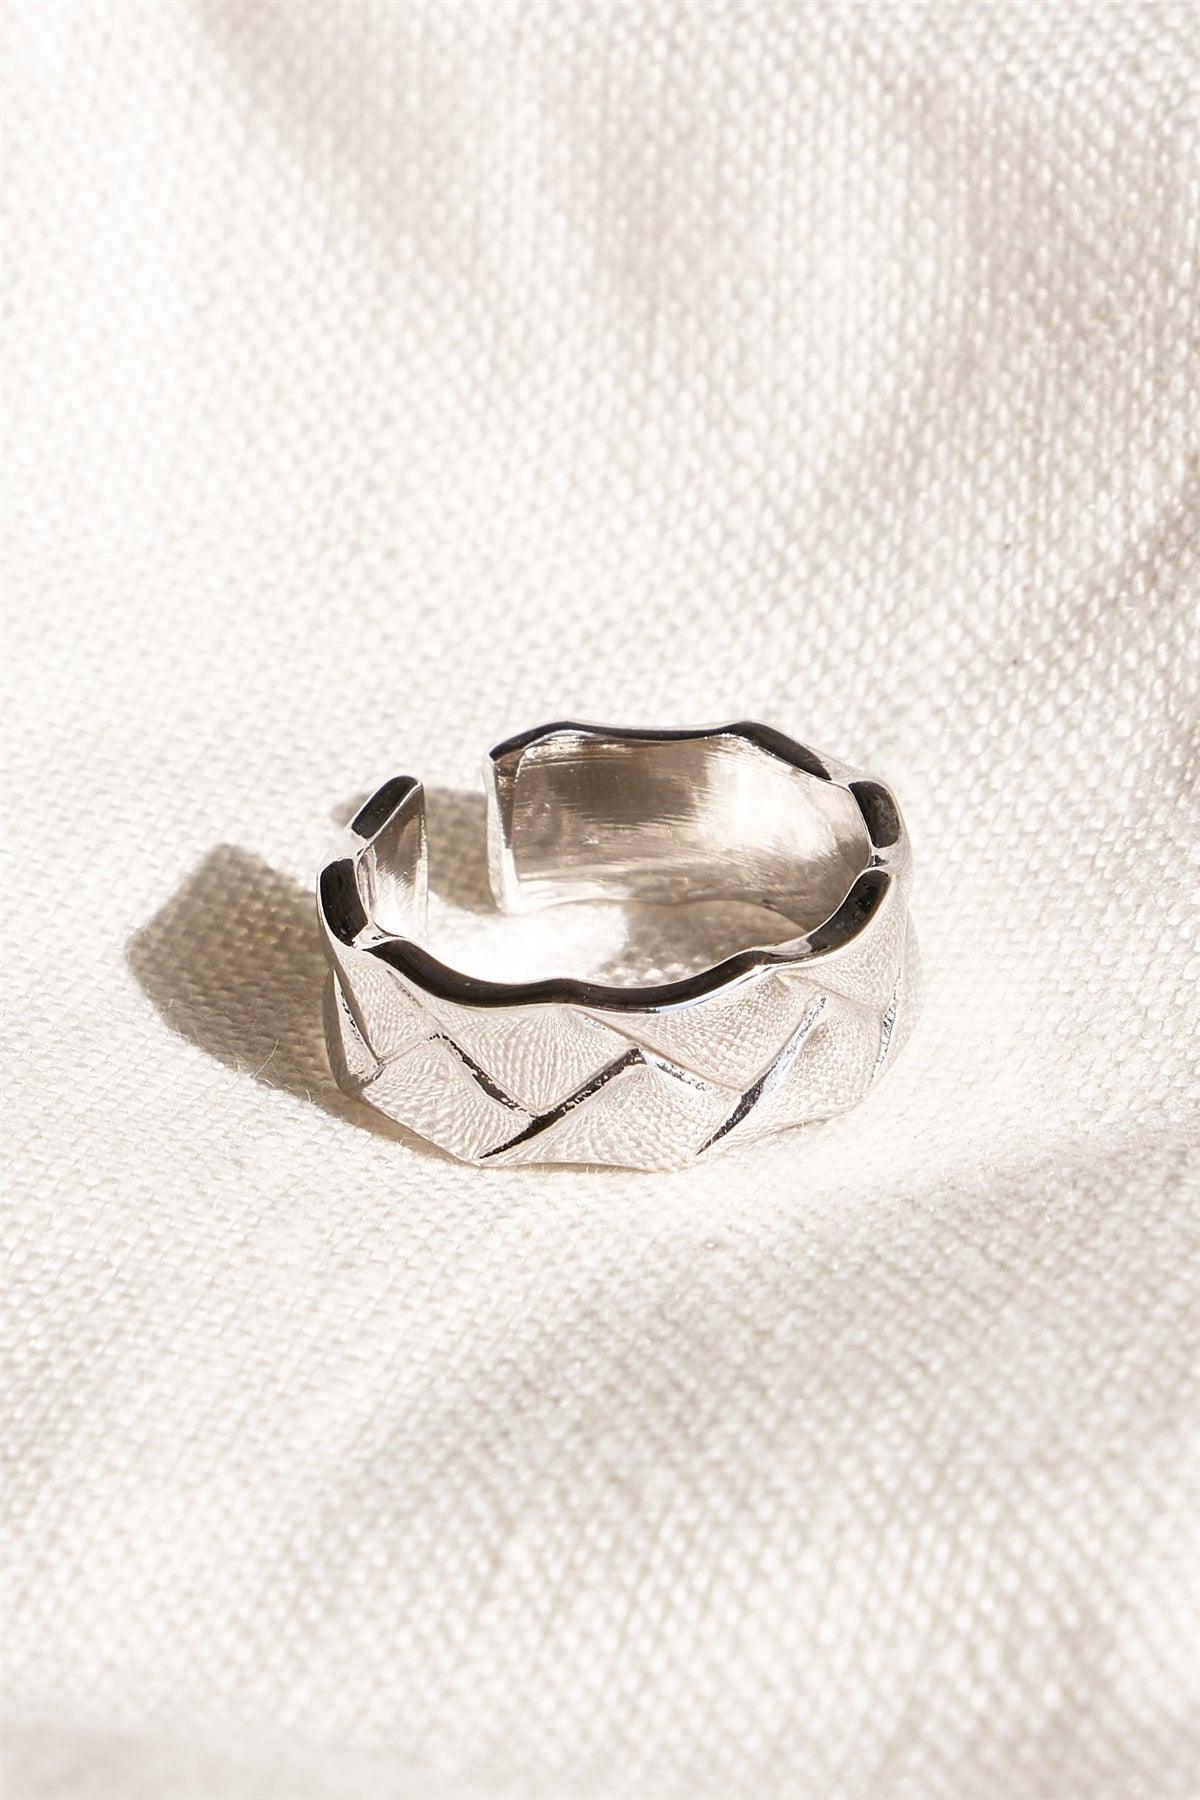 Silver Metallic Textured Ring /4 Pieces